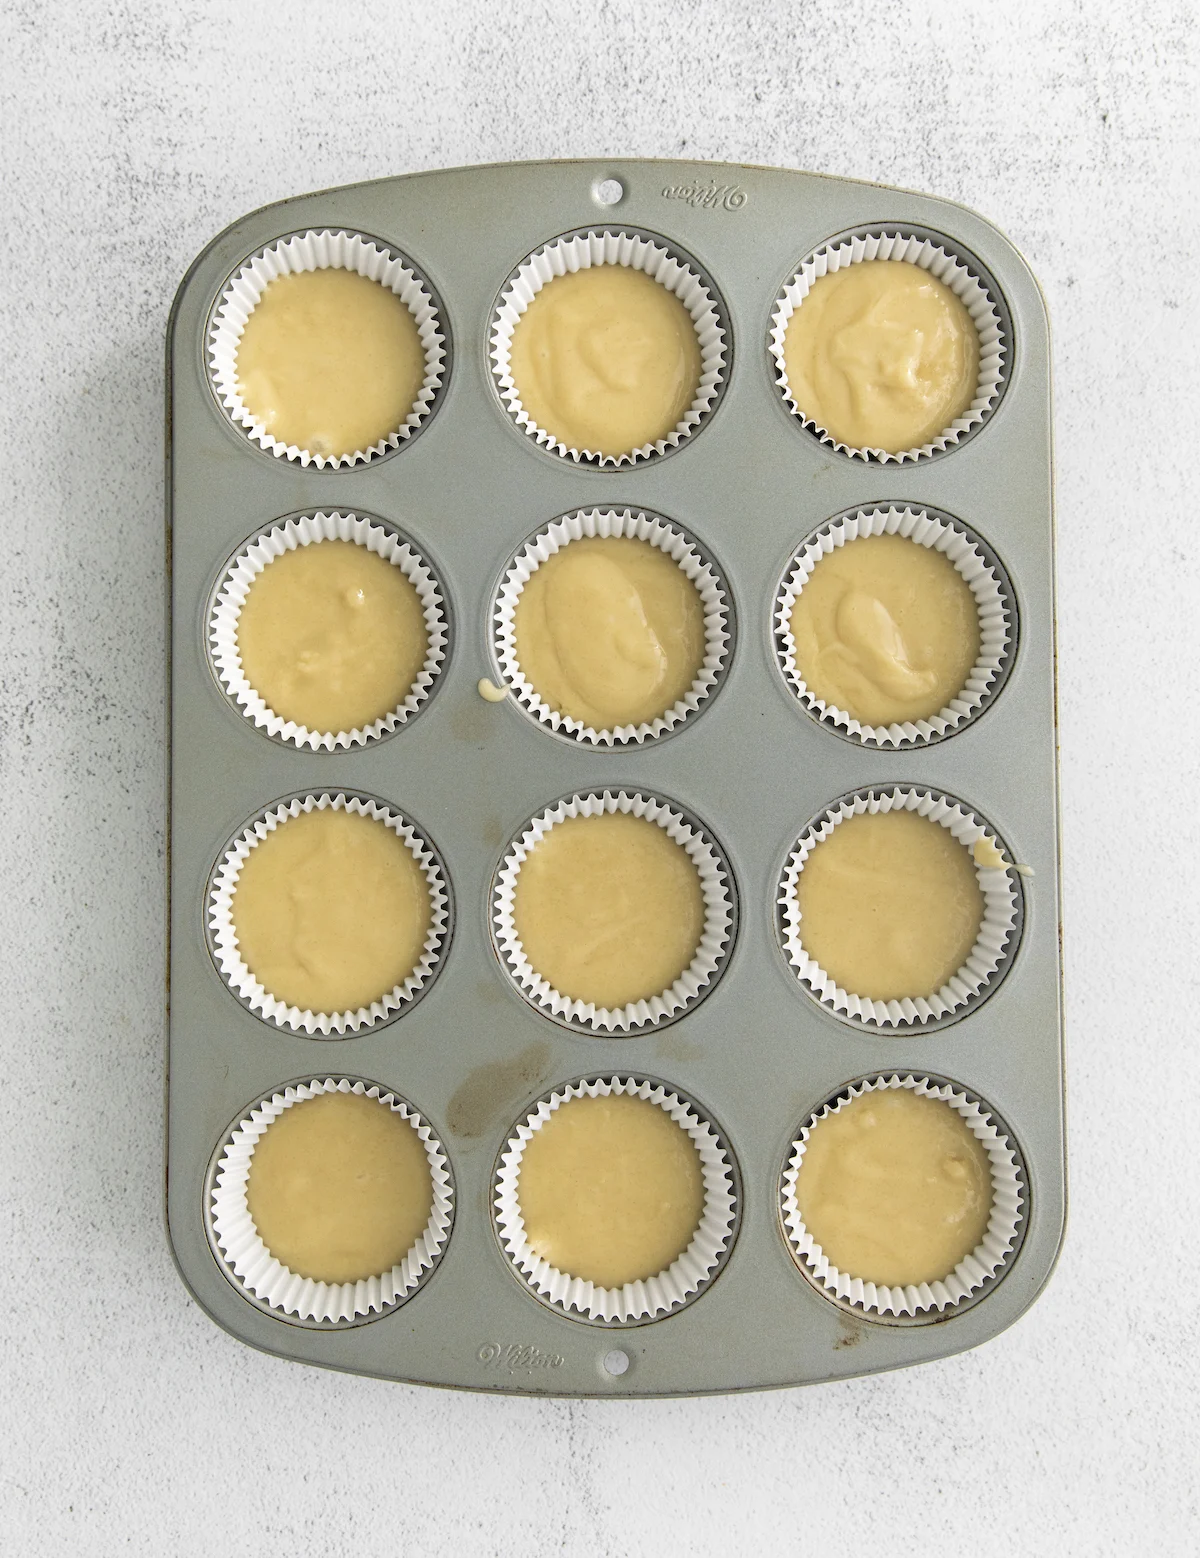 Cupcake batter in a cupcake pan